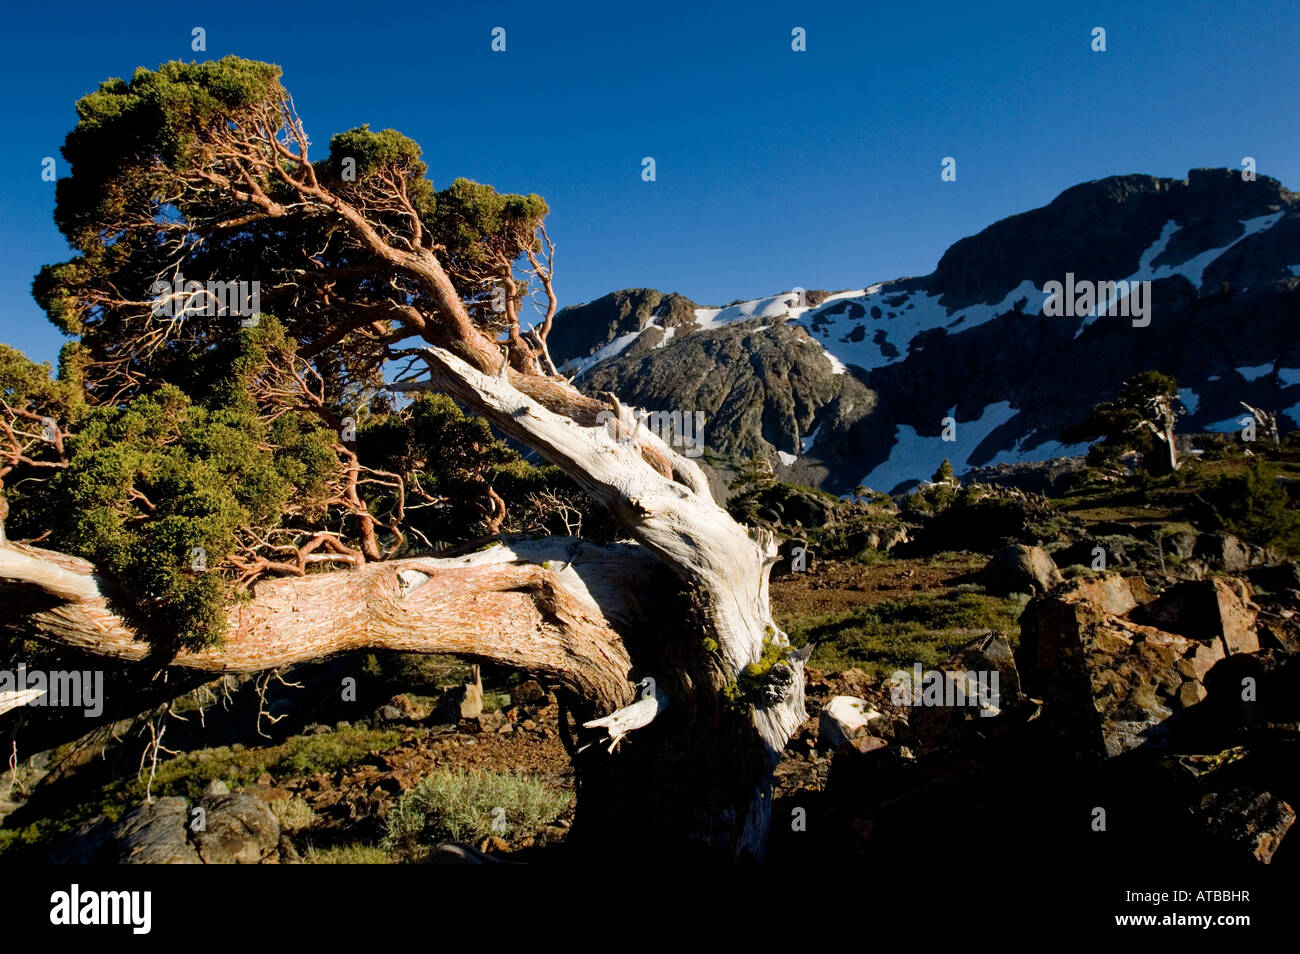 Foxtail Pine pinus balfouriana tree growing out of rocks Desolation Wilderness El Dorado National Forest California Stock Photo